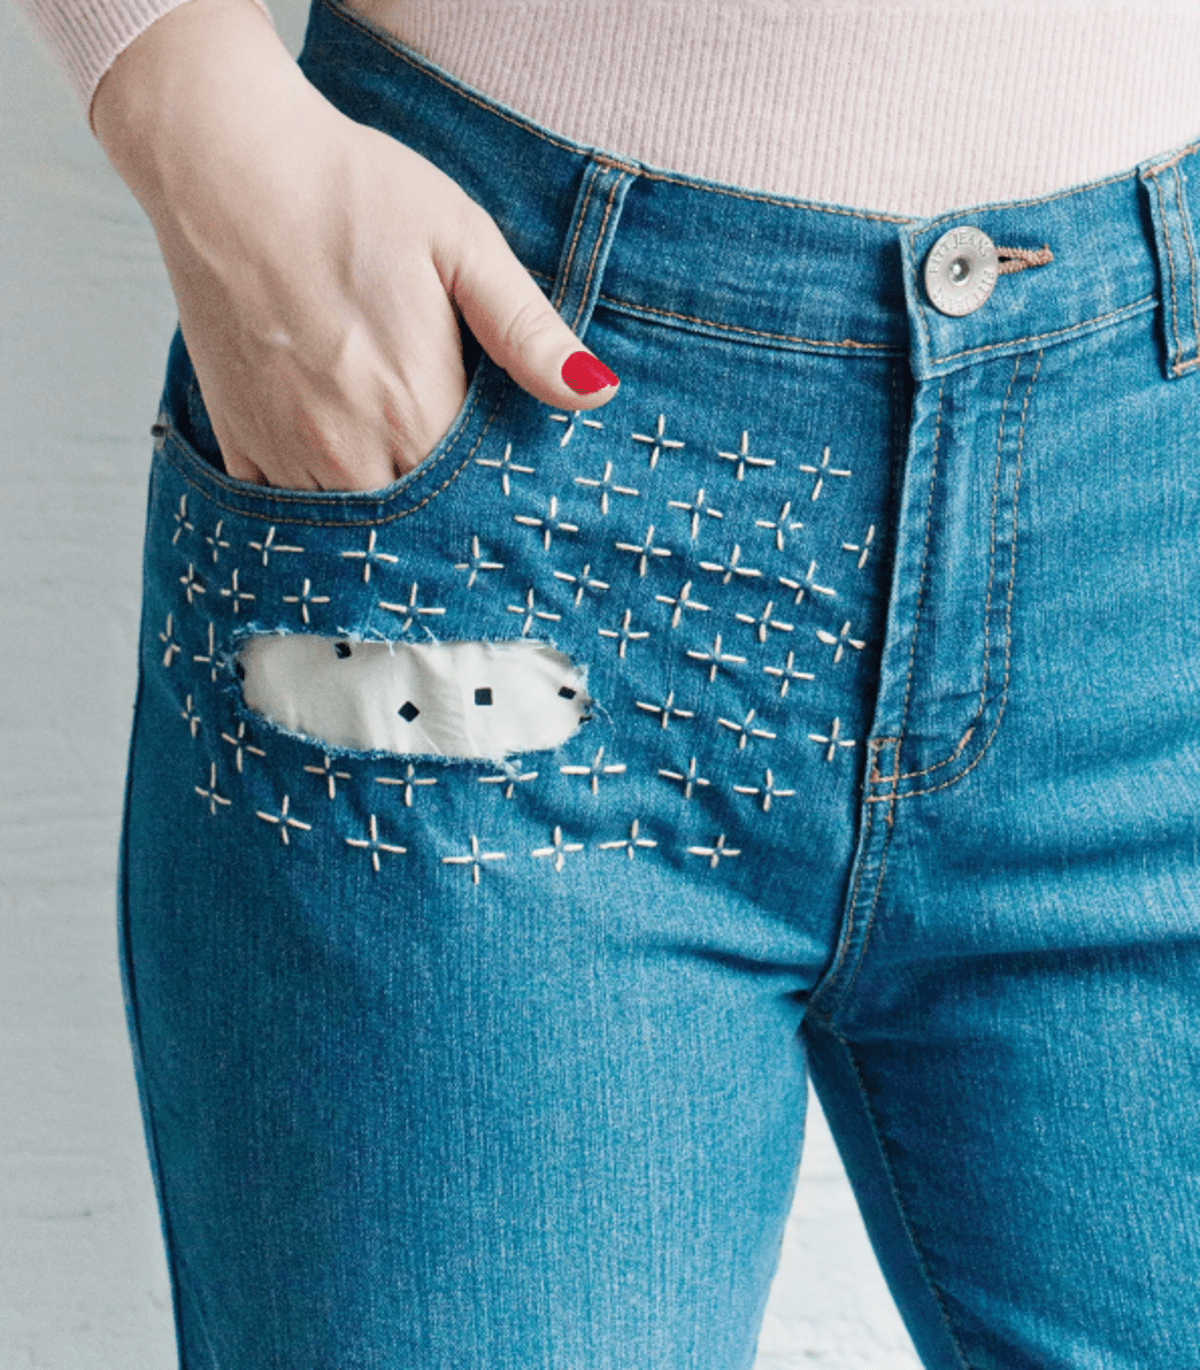 Jeans with sashiko embroidery